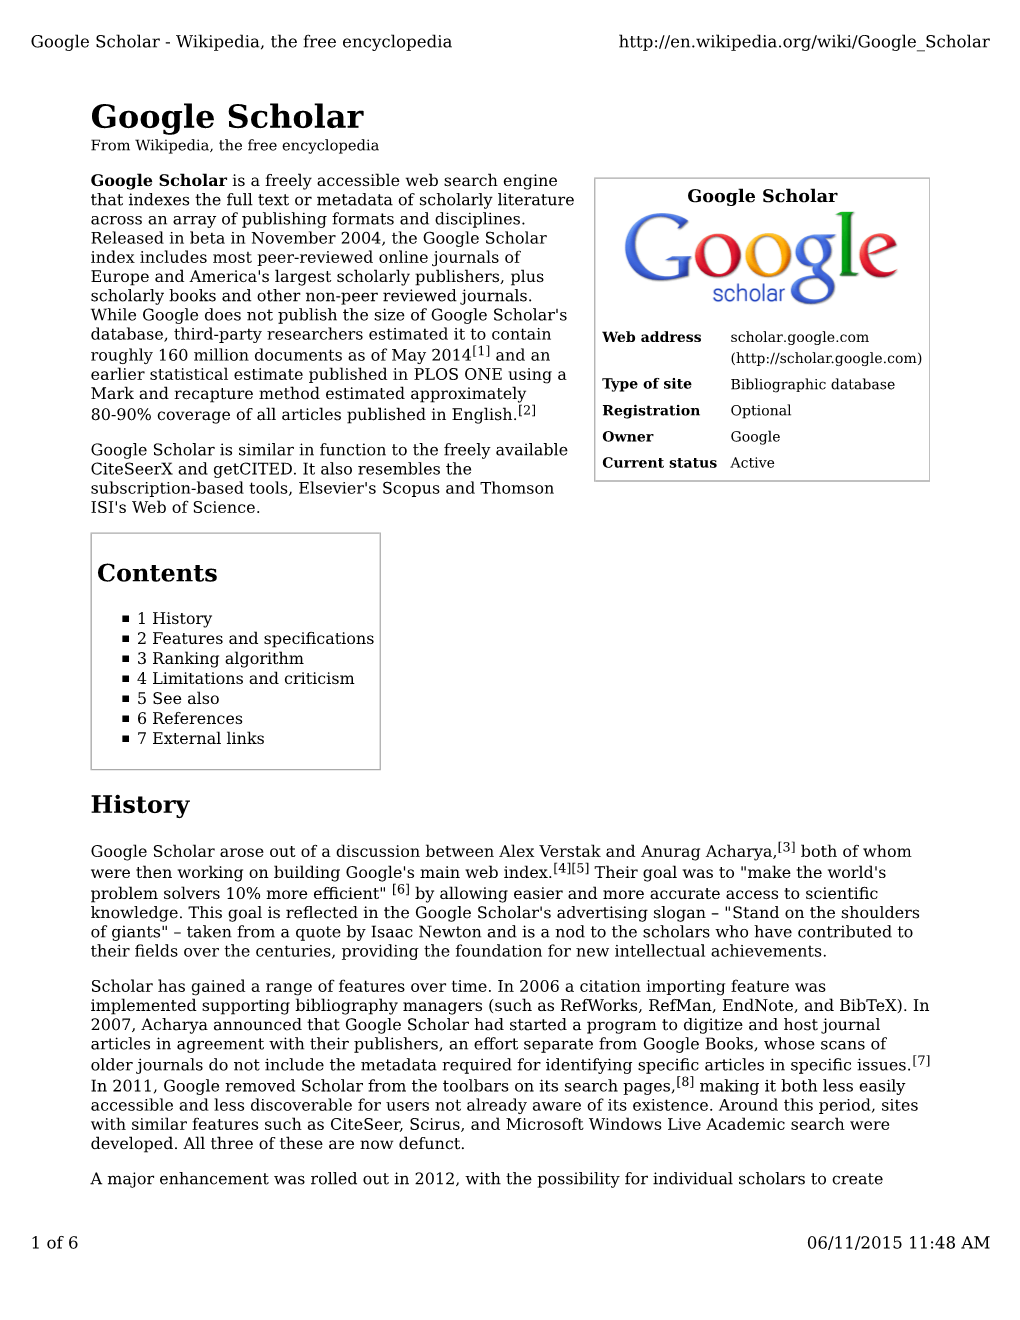 Google Scholar - Wikipedia, the Free Encyclopedia